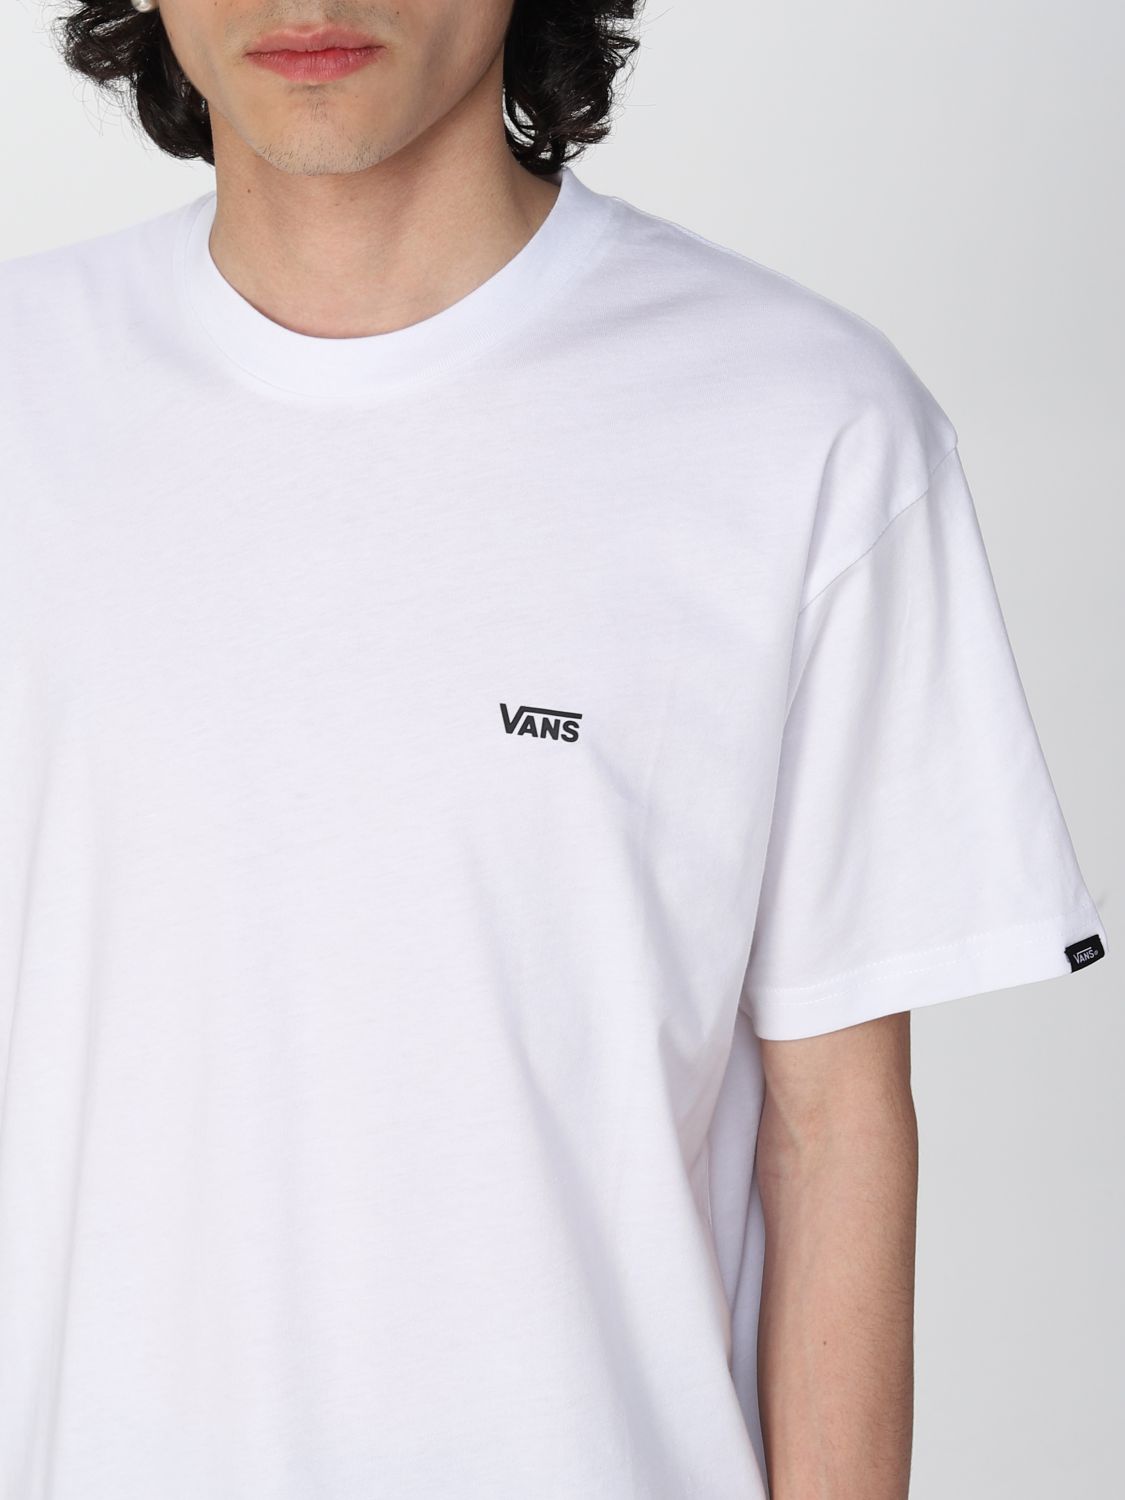 Vans Tシャツ メンズ ホワイト Giglio Comオンラインのvans Tシャツ Vn0a3cze